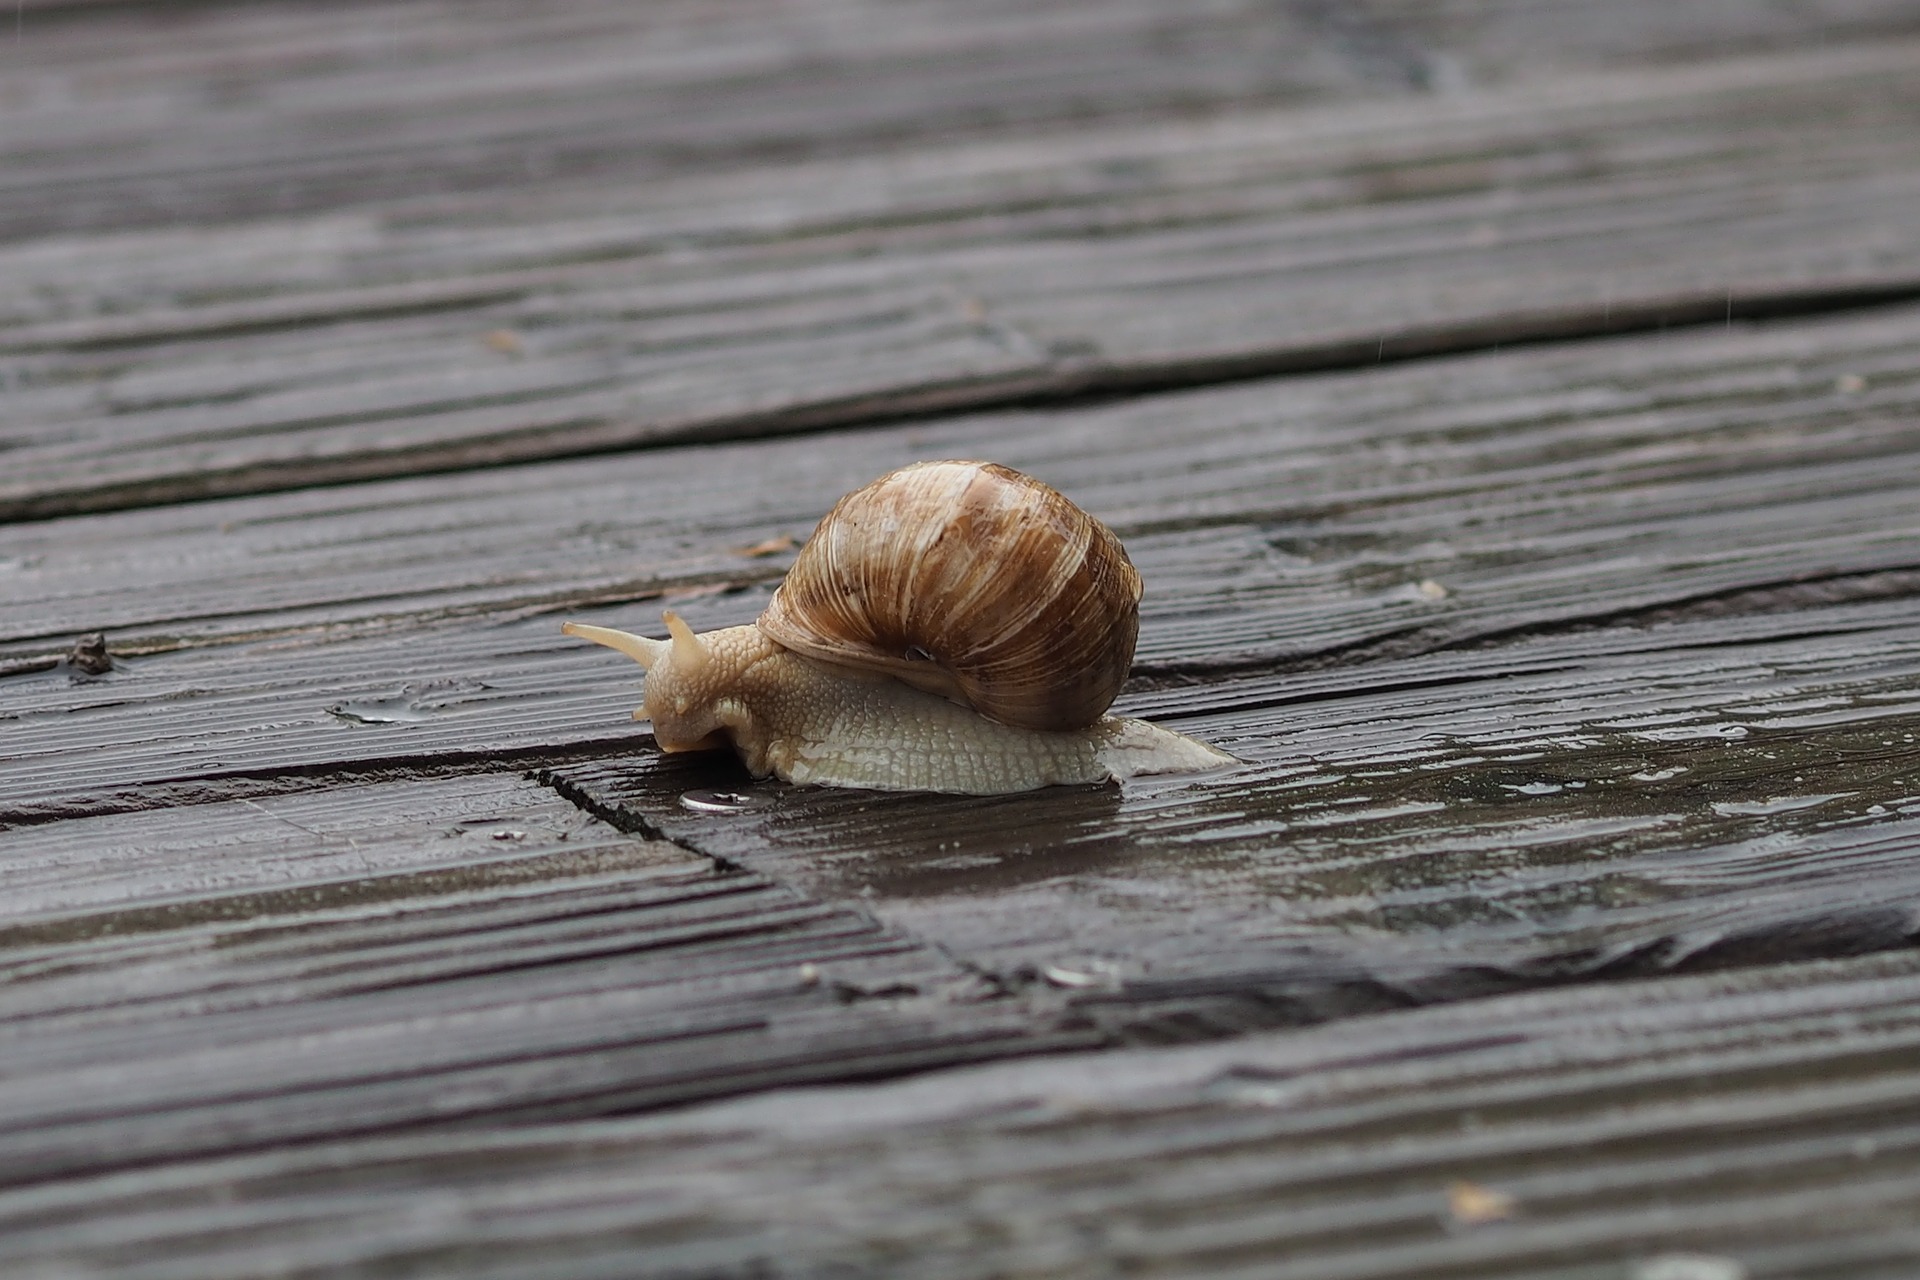 A snail in the rain